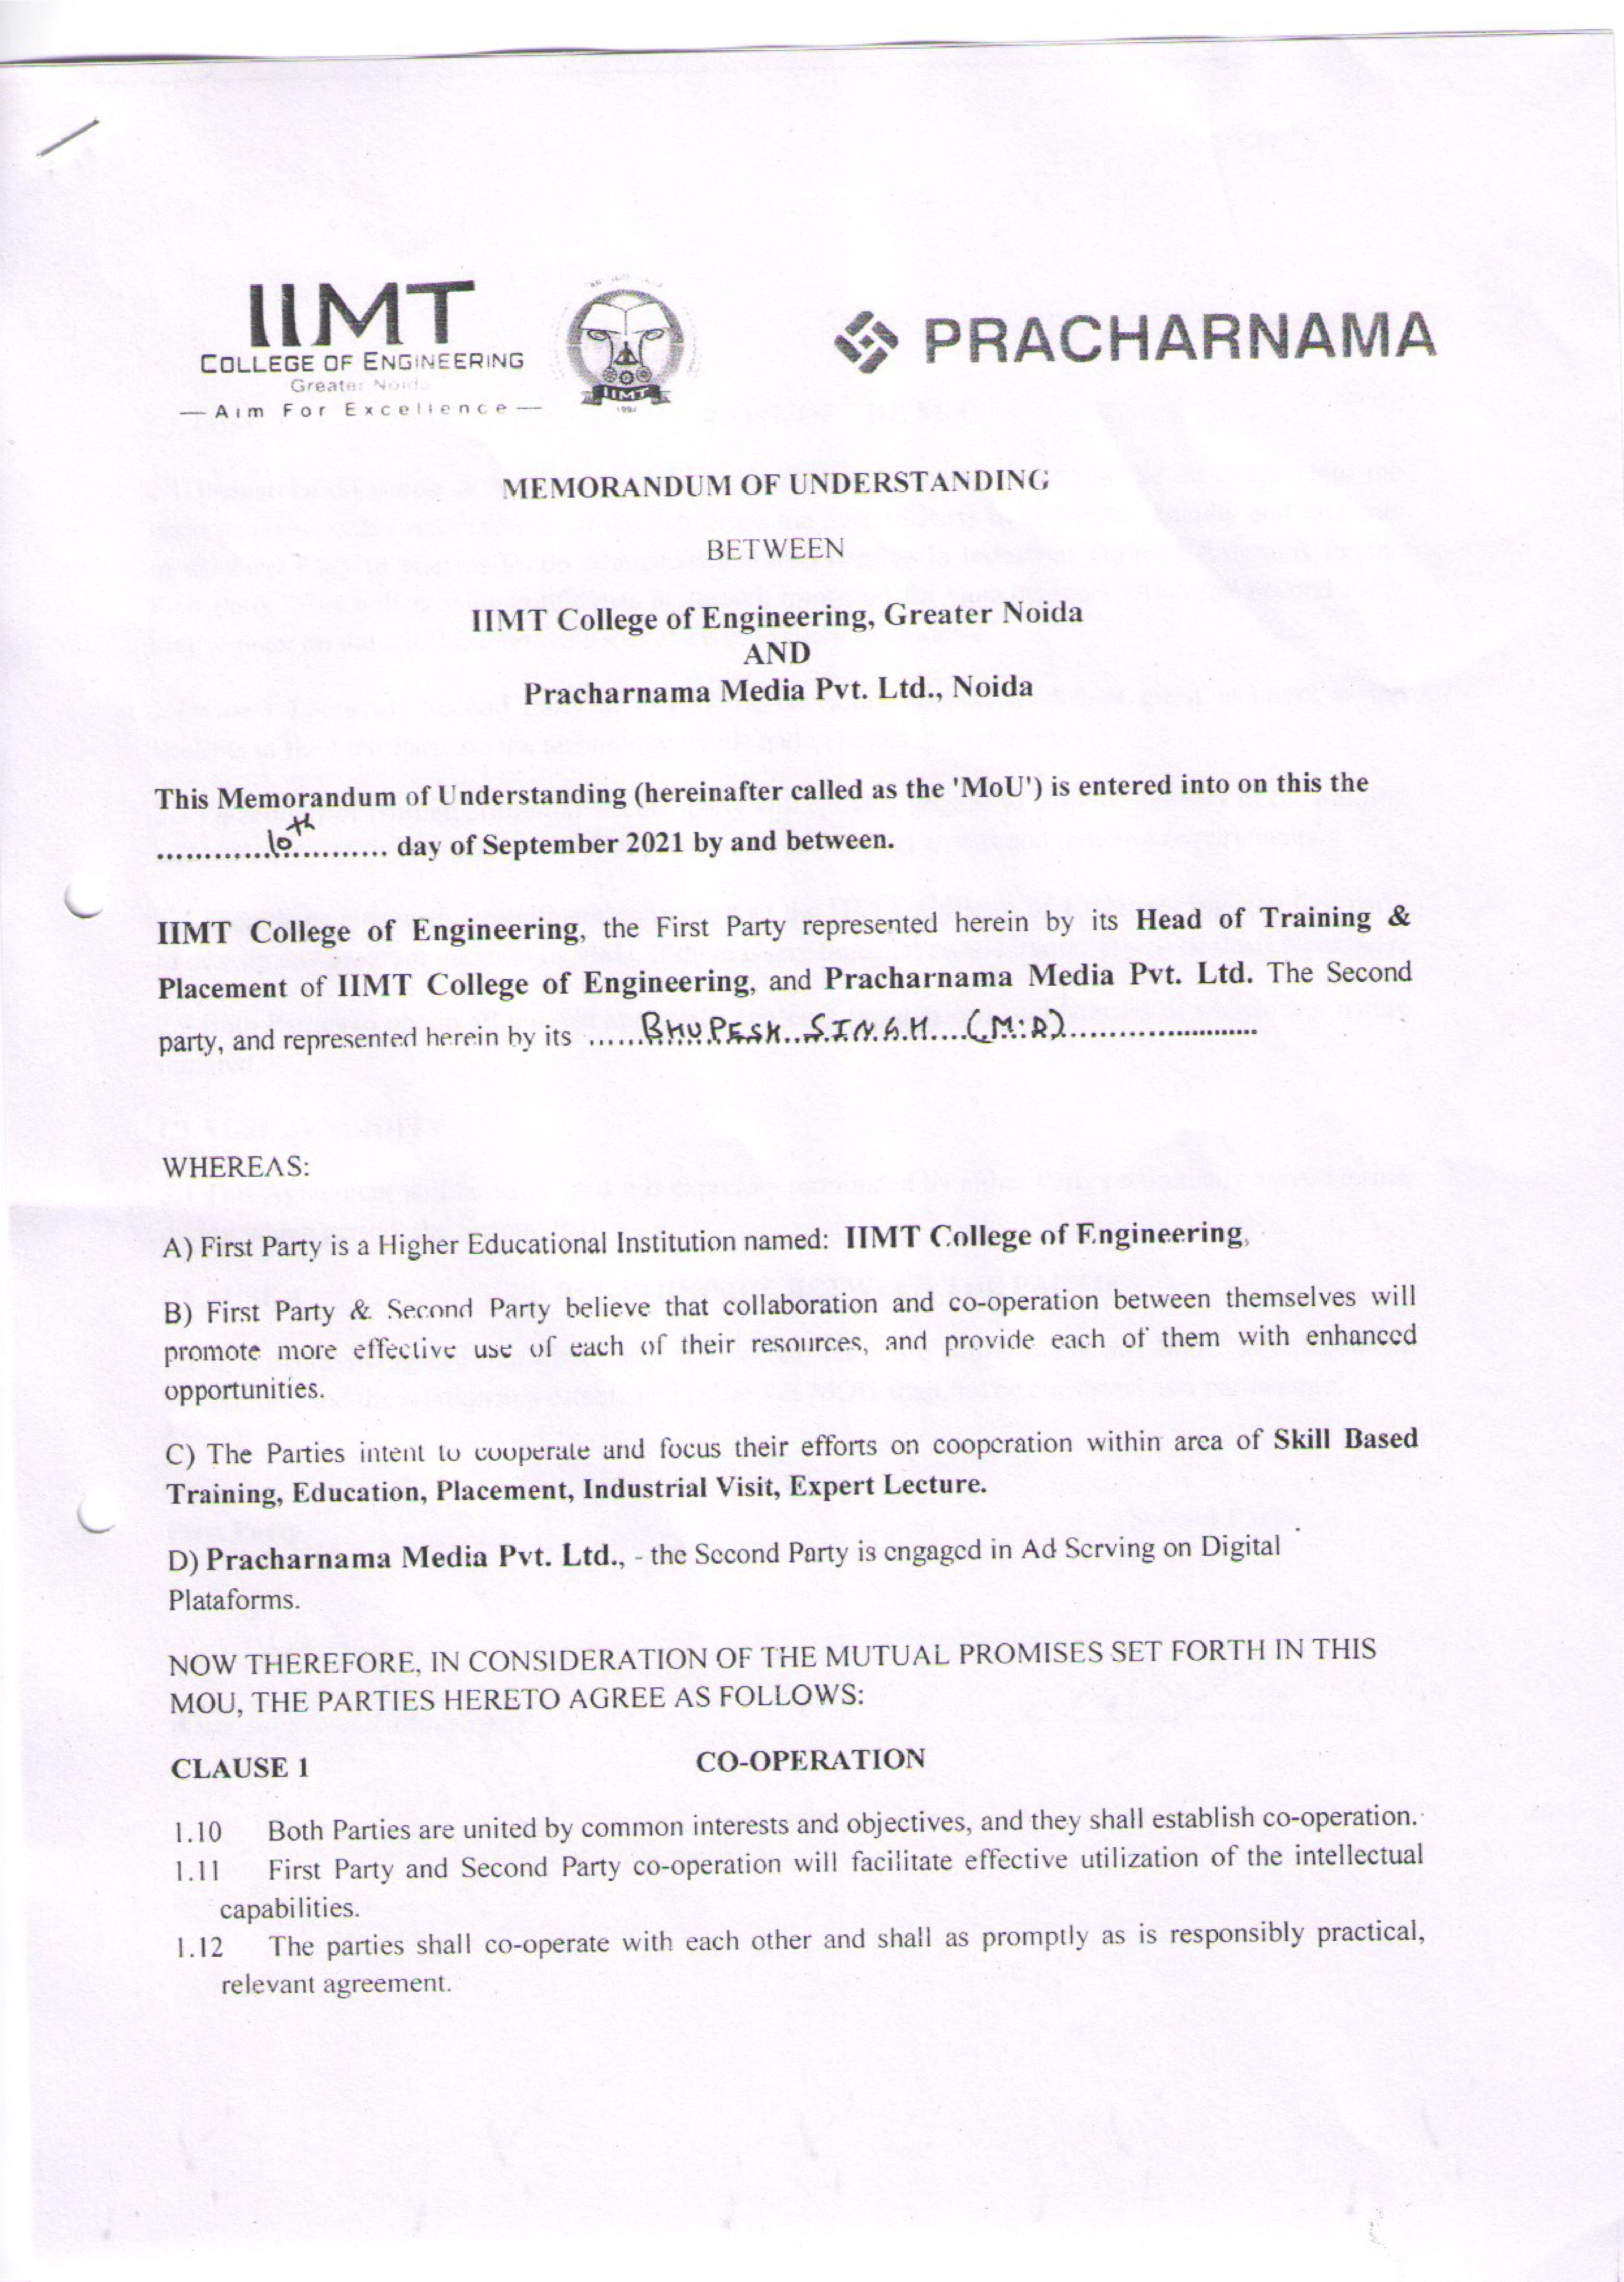 Pracharnama Media Pvt. Ltd.